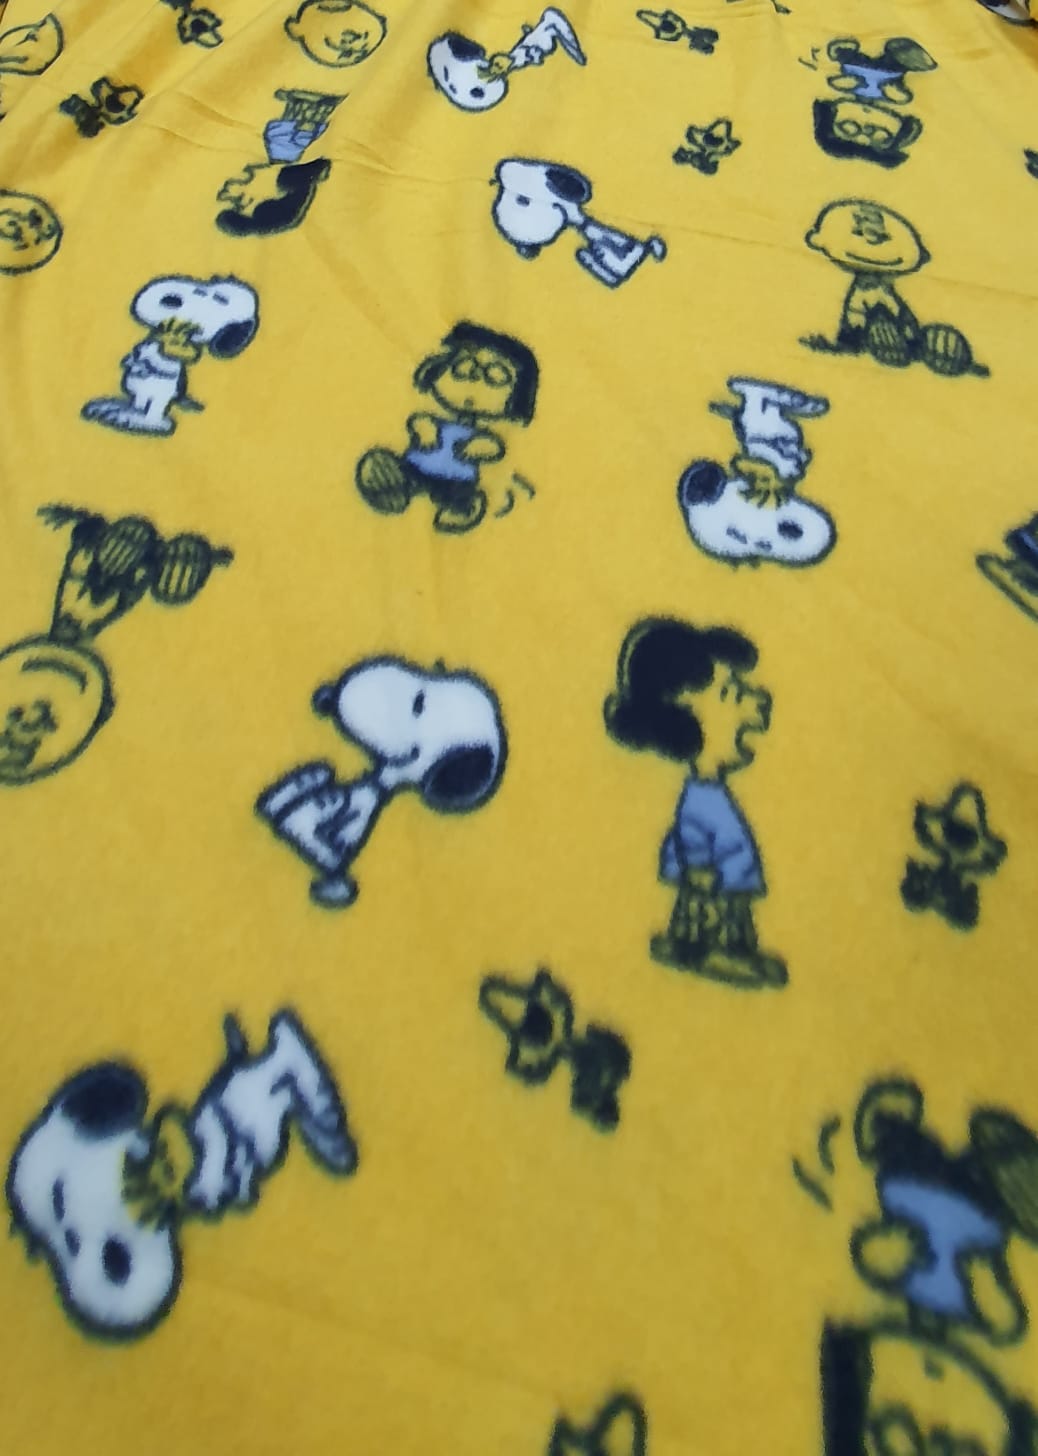 Soft Estampado Snoopy Fundo Amarelo